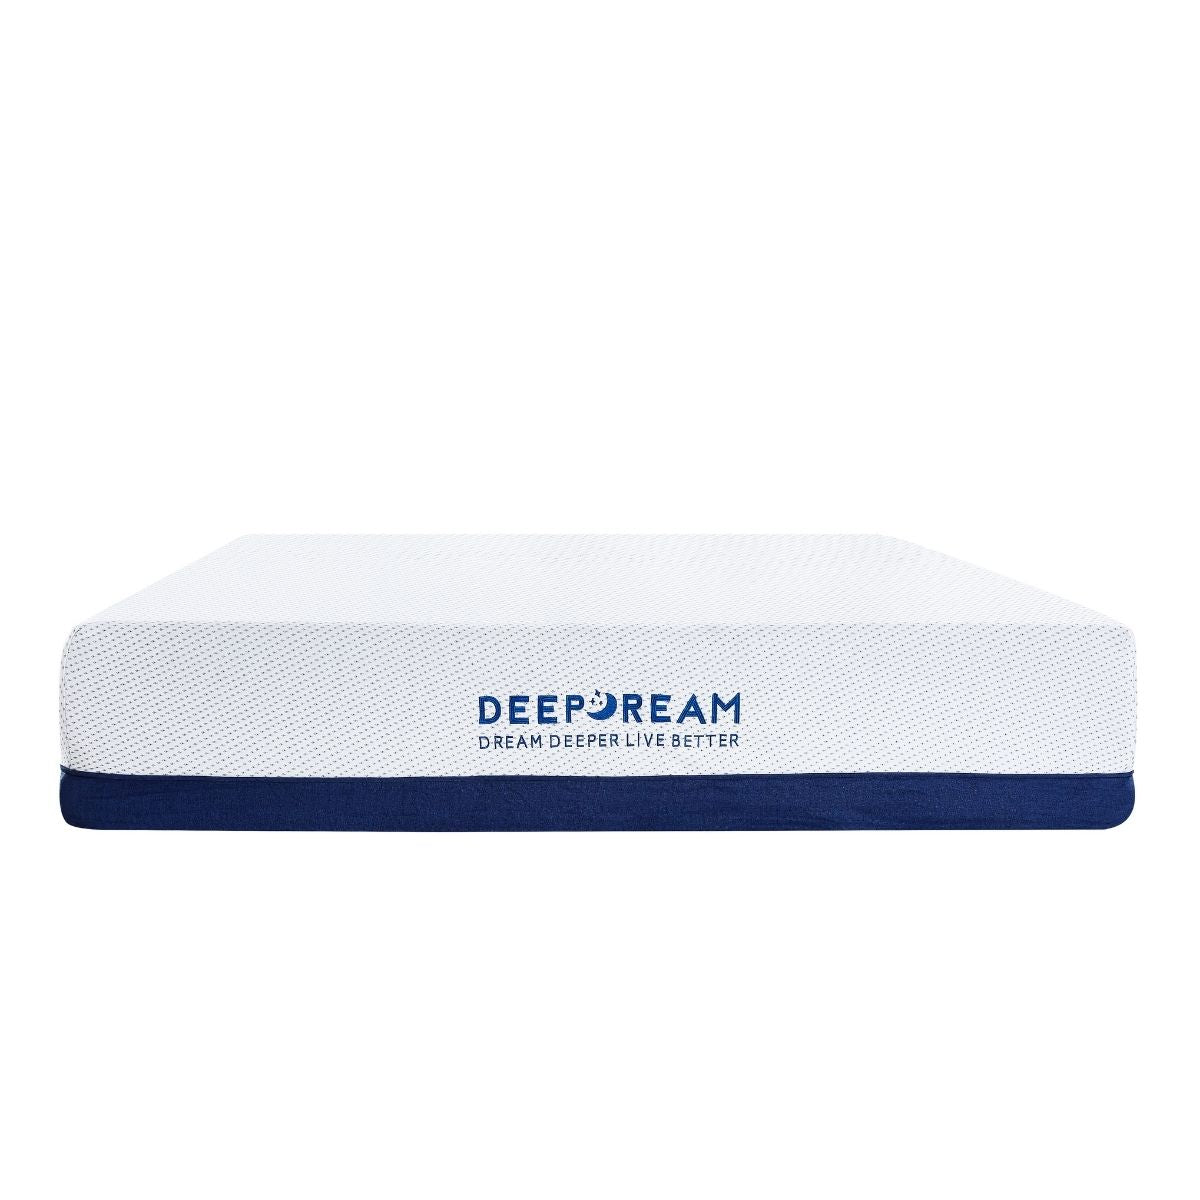 Queen memory foam mattress featuring blue and white brand logo